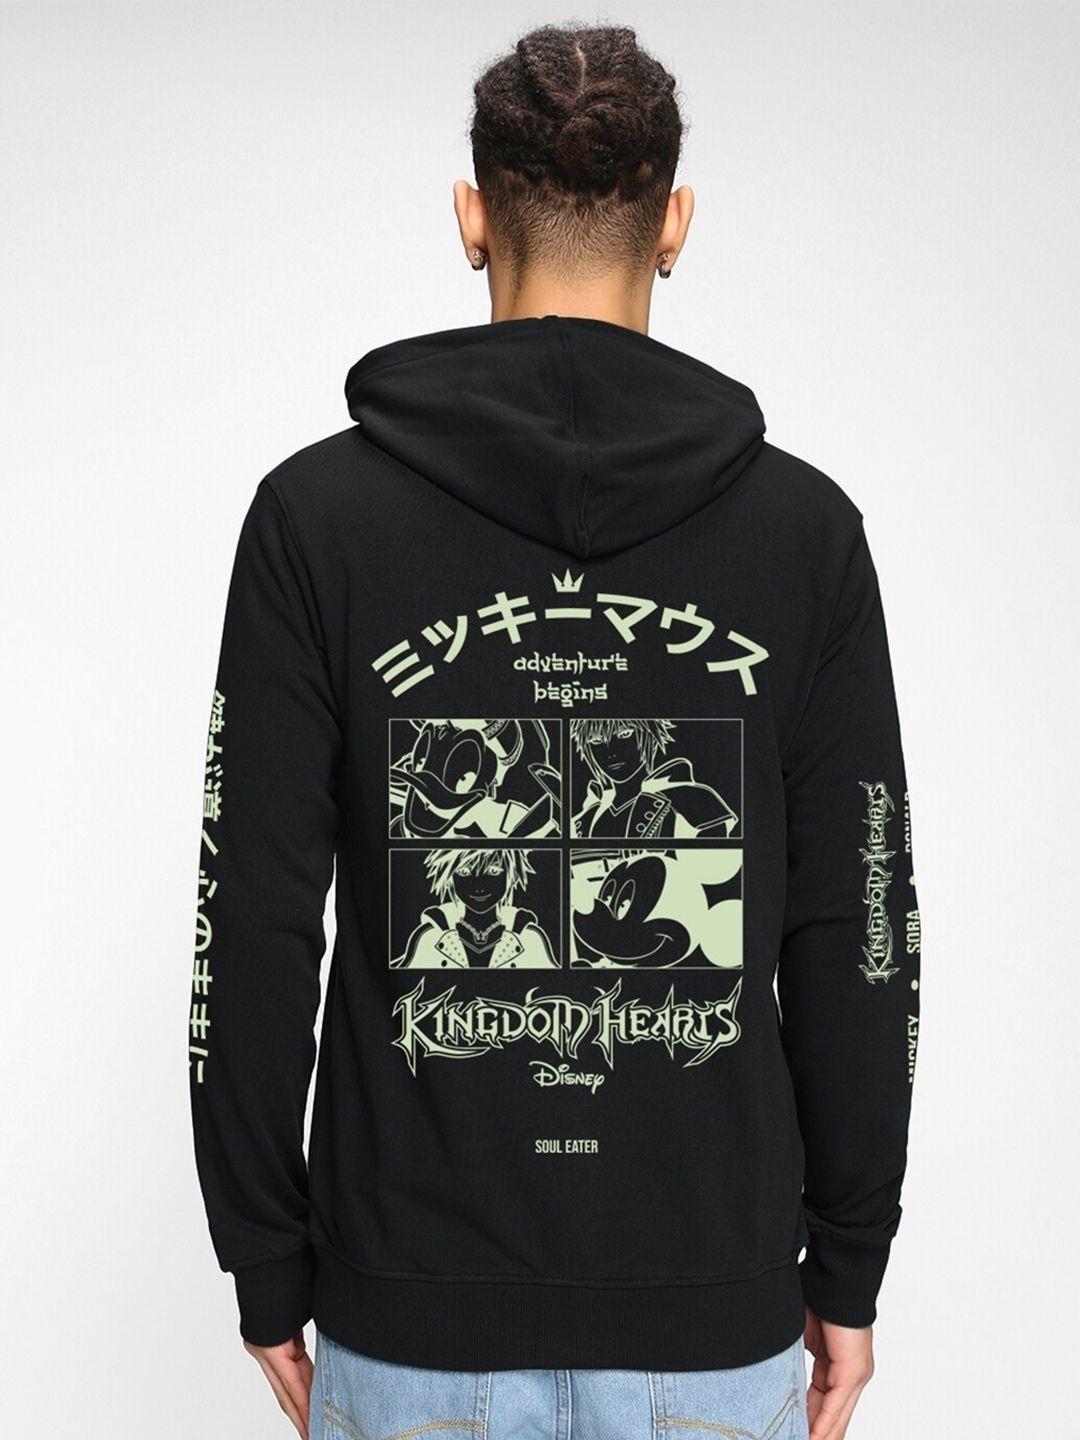 bewakoof-official-merchandise-mickey's-kingdom-graphic-printed-fleece-hooded-sweatshirt